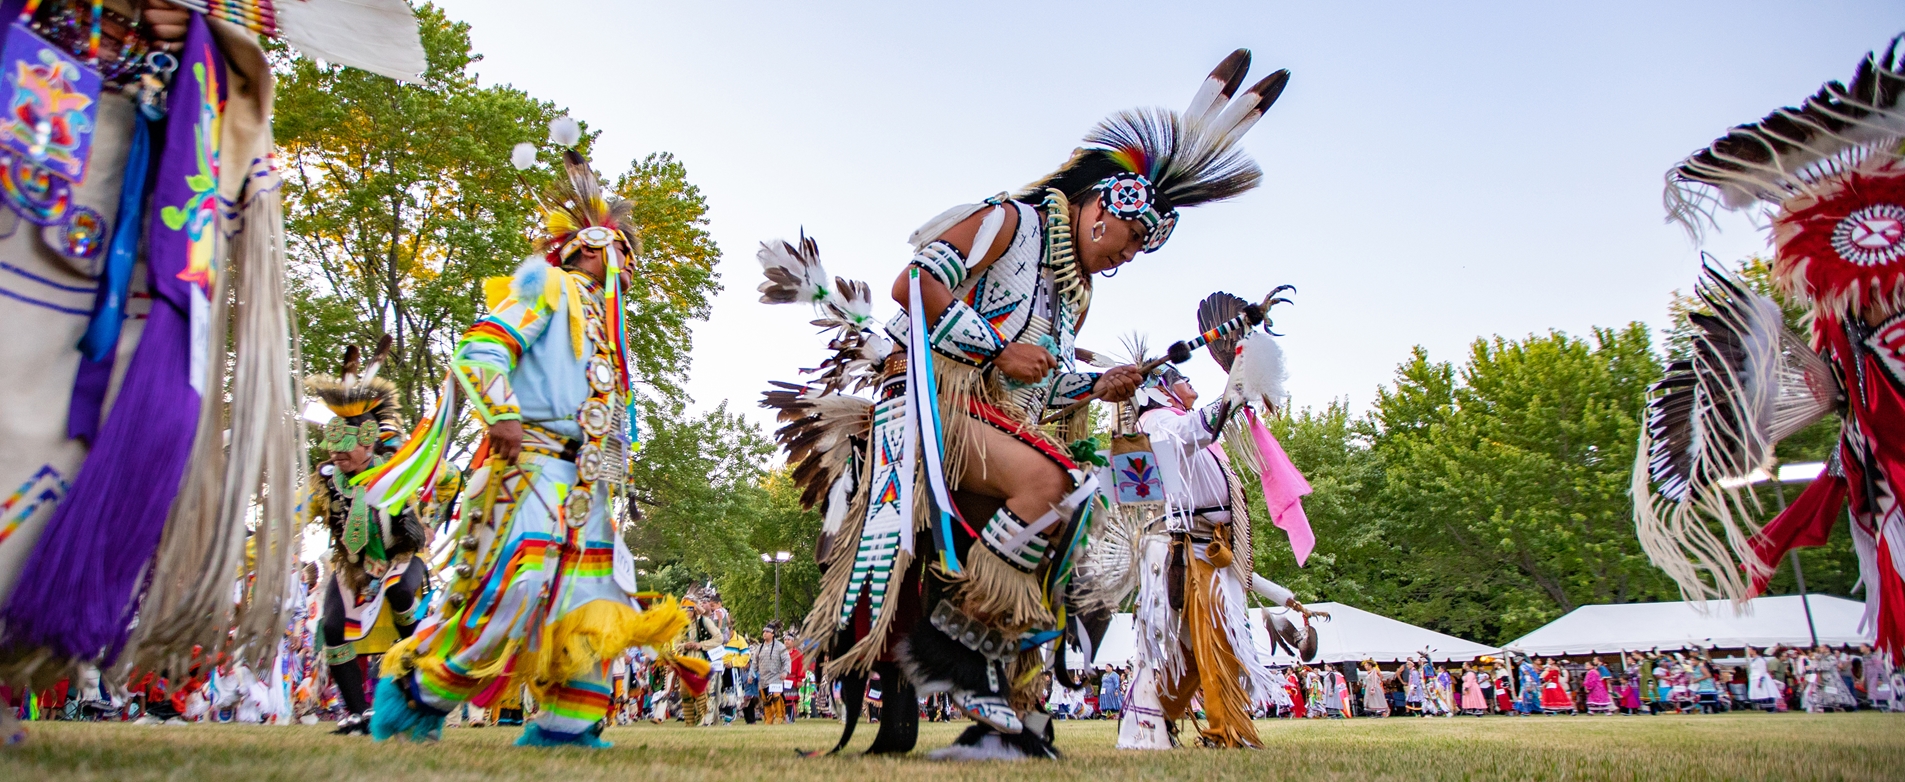 Native Americans Dancing at a Powwow